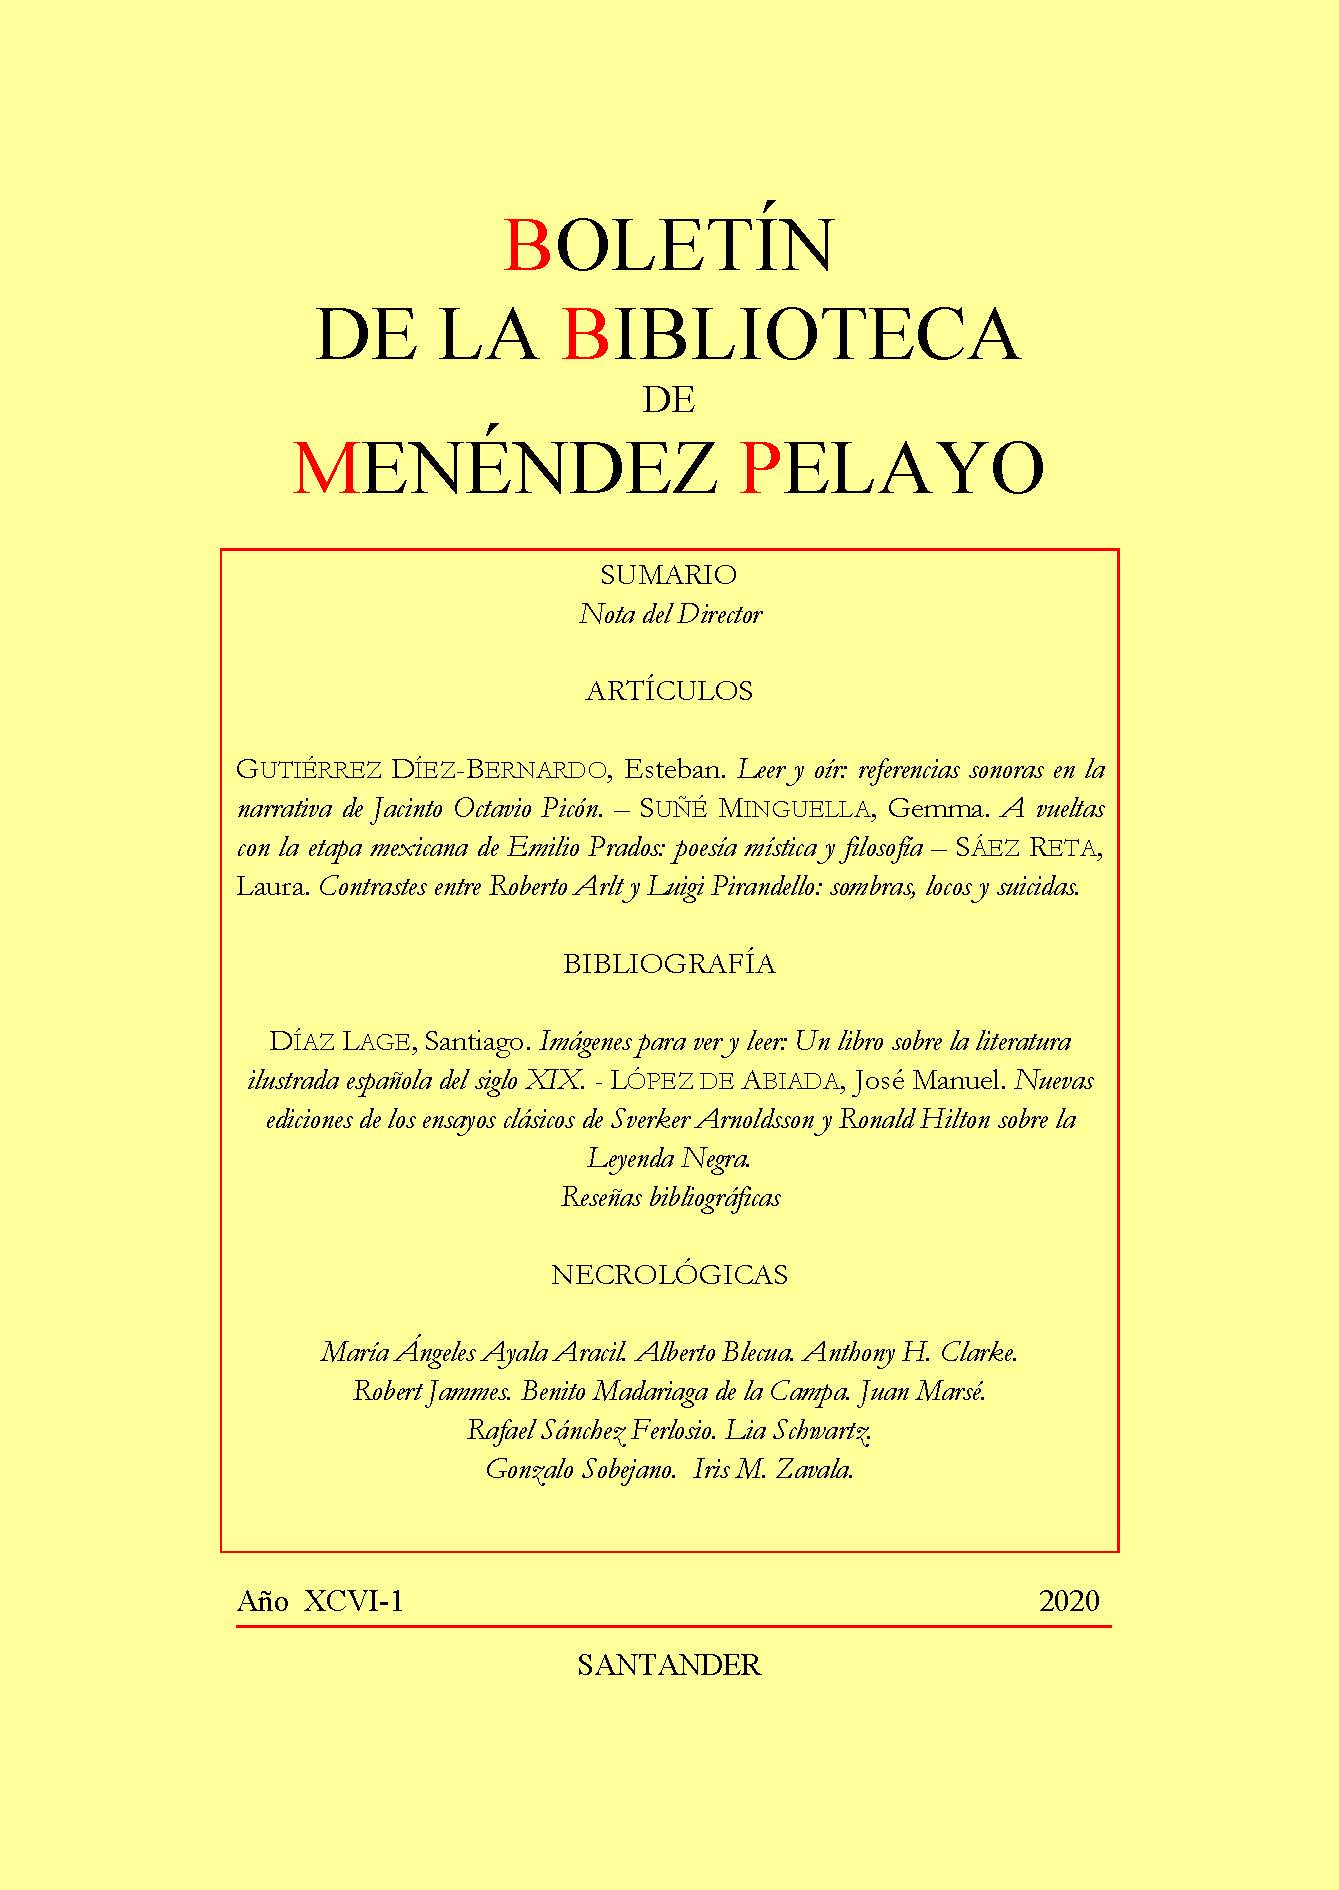 					Ver Vol. 96 Núm. 1 (2020): Boletín de la Biblioteca de Menéndez Pelayo. XCVI (2020)
				